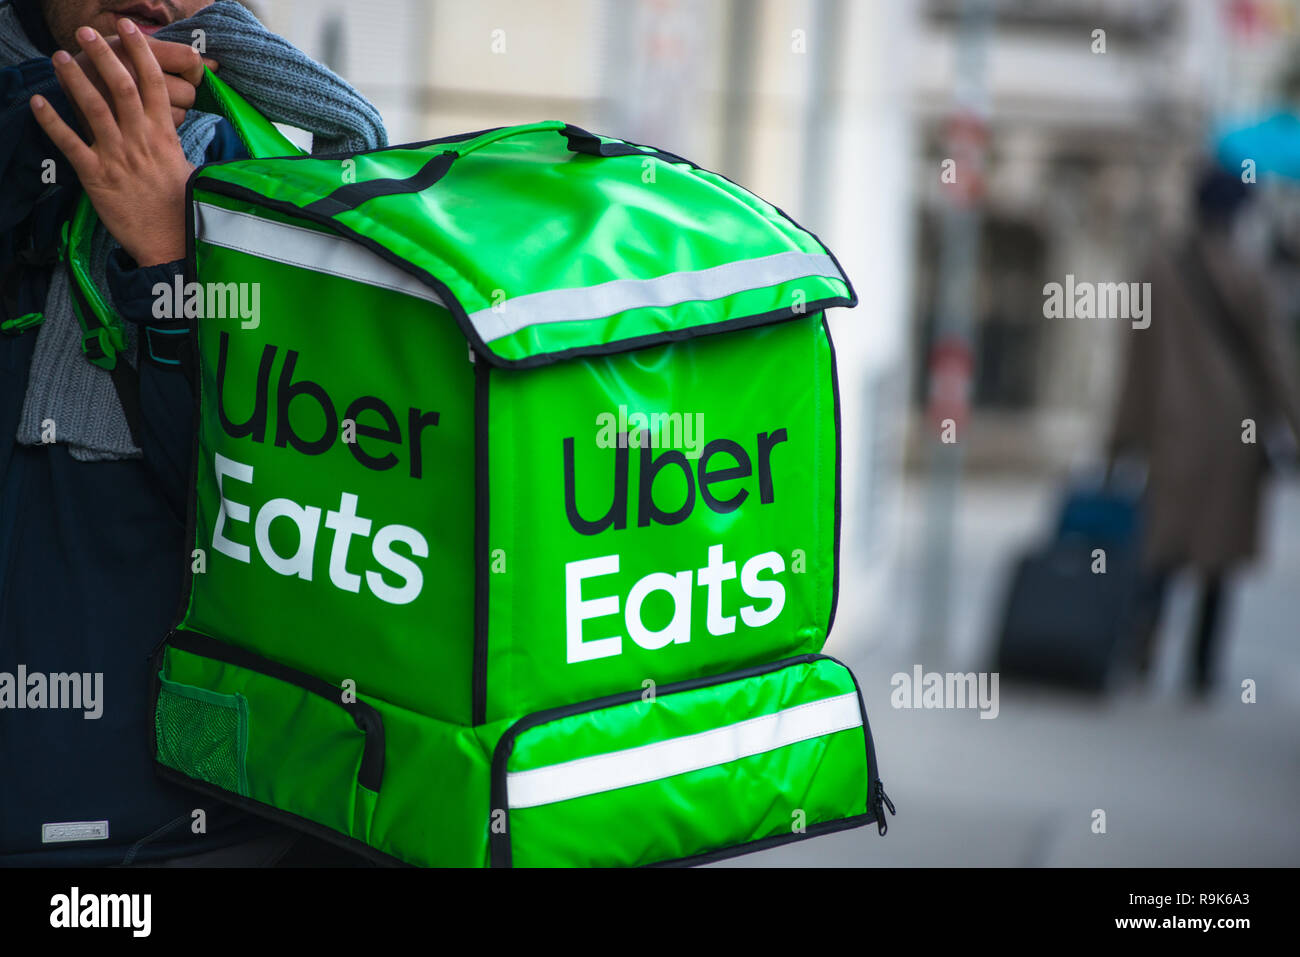 Uber Eats Stock Photos & Uber Eats Stock Images - Alamy